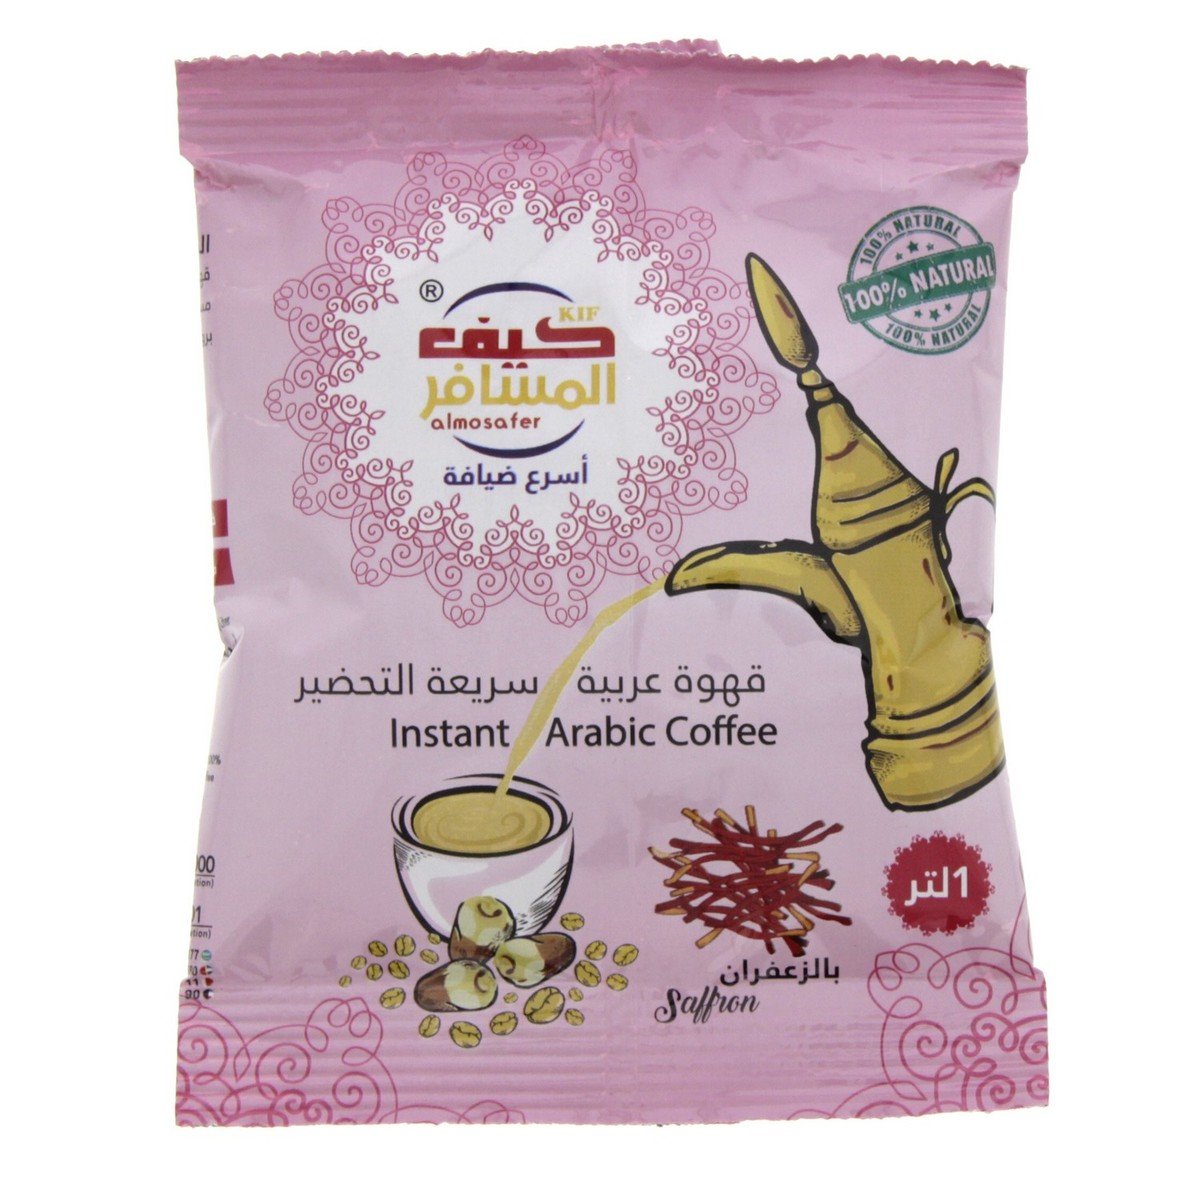 Kif Almosafer Instant Arabic Coffee Saffron 30g